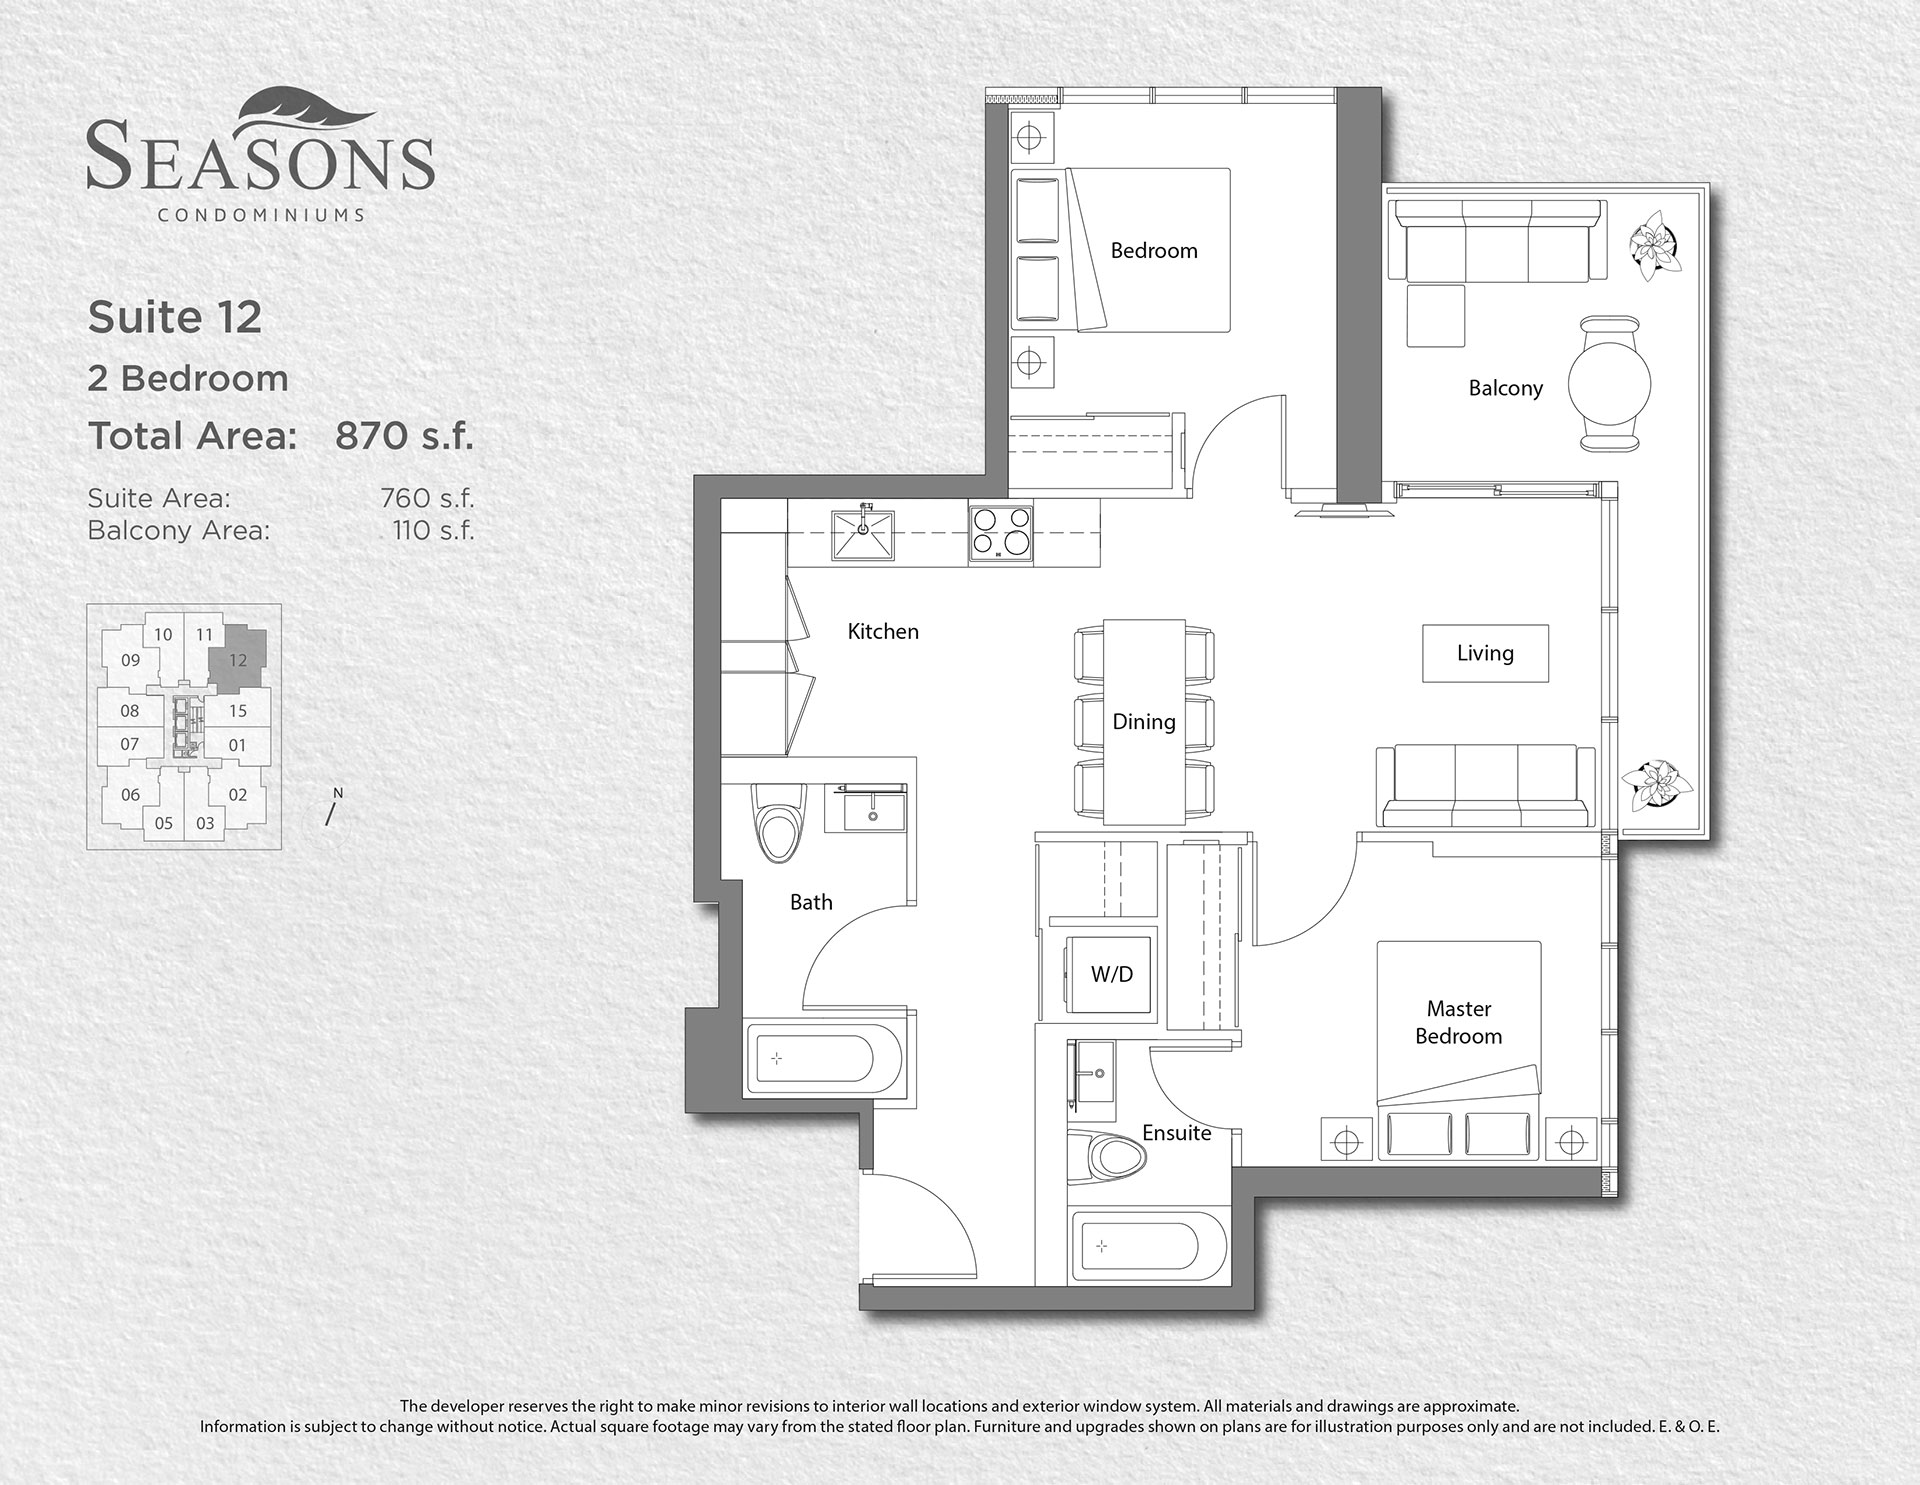  Floor Plan of Seasons II Condos with undefined beds